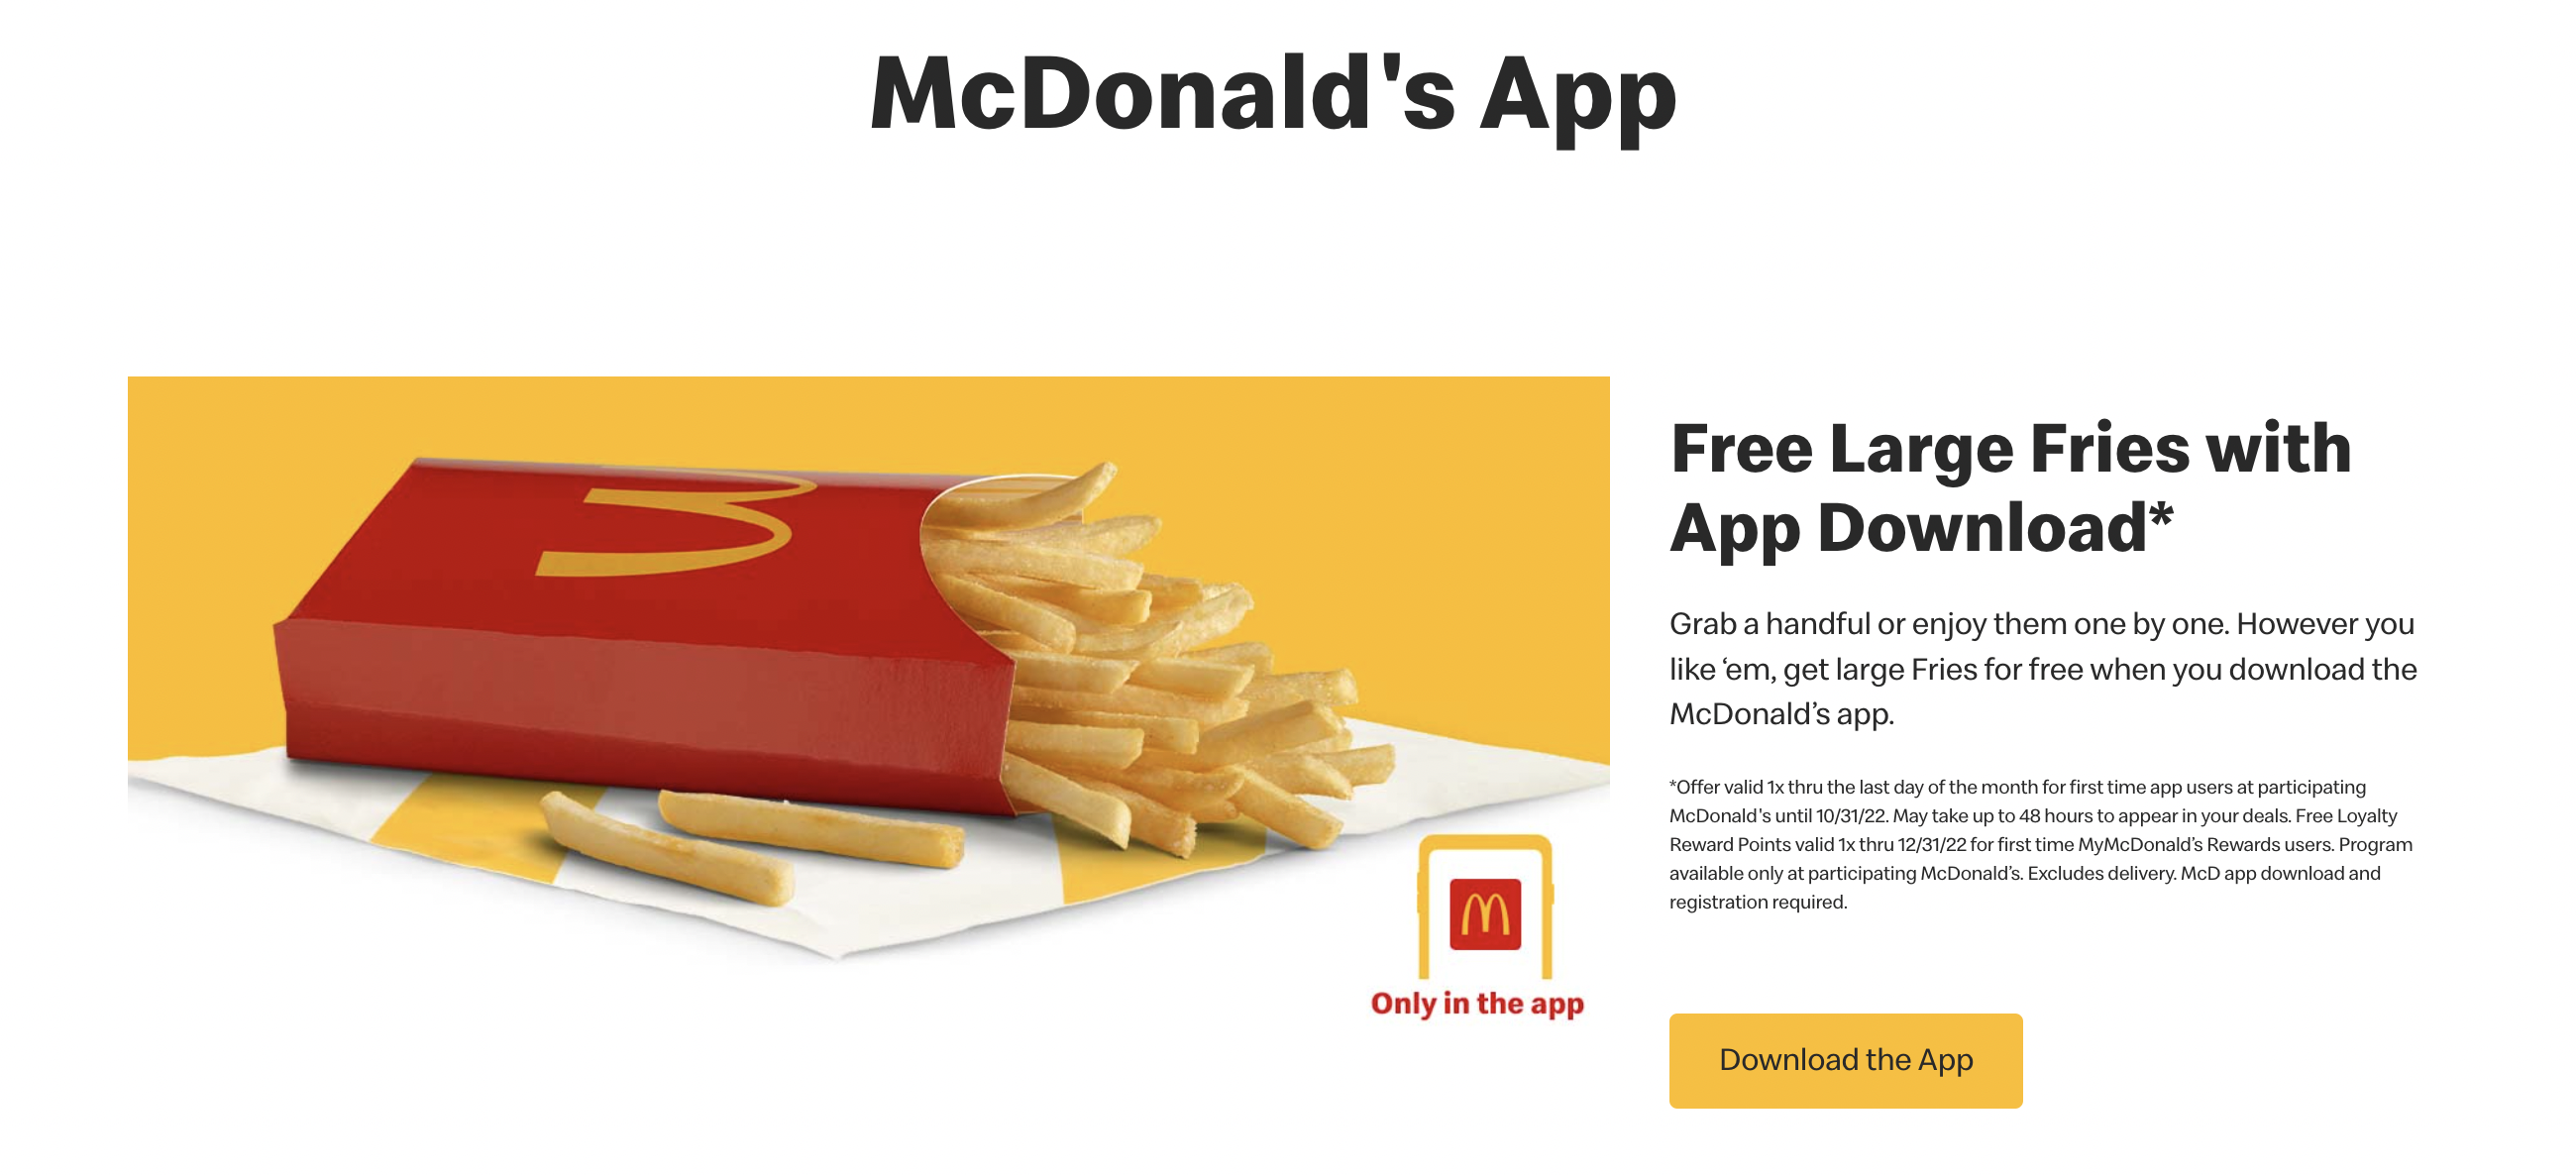 mcdonalds app restaurant copywriting